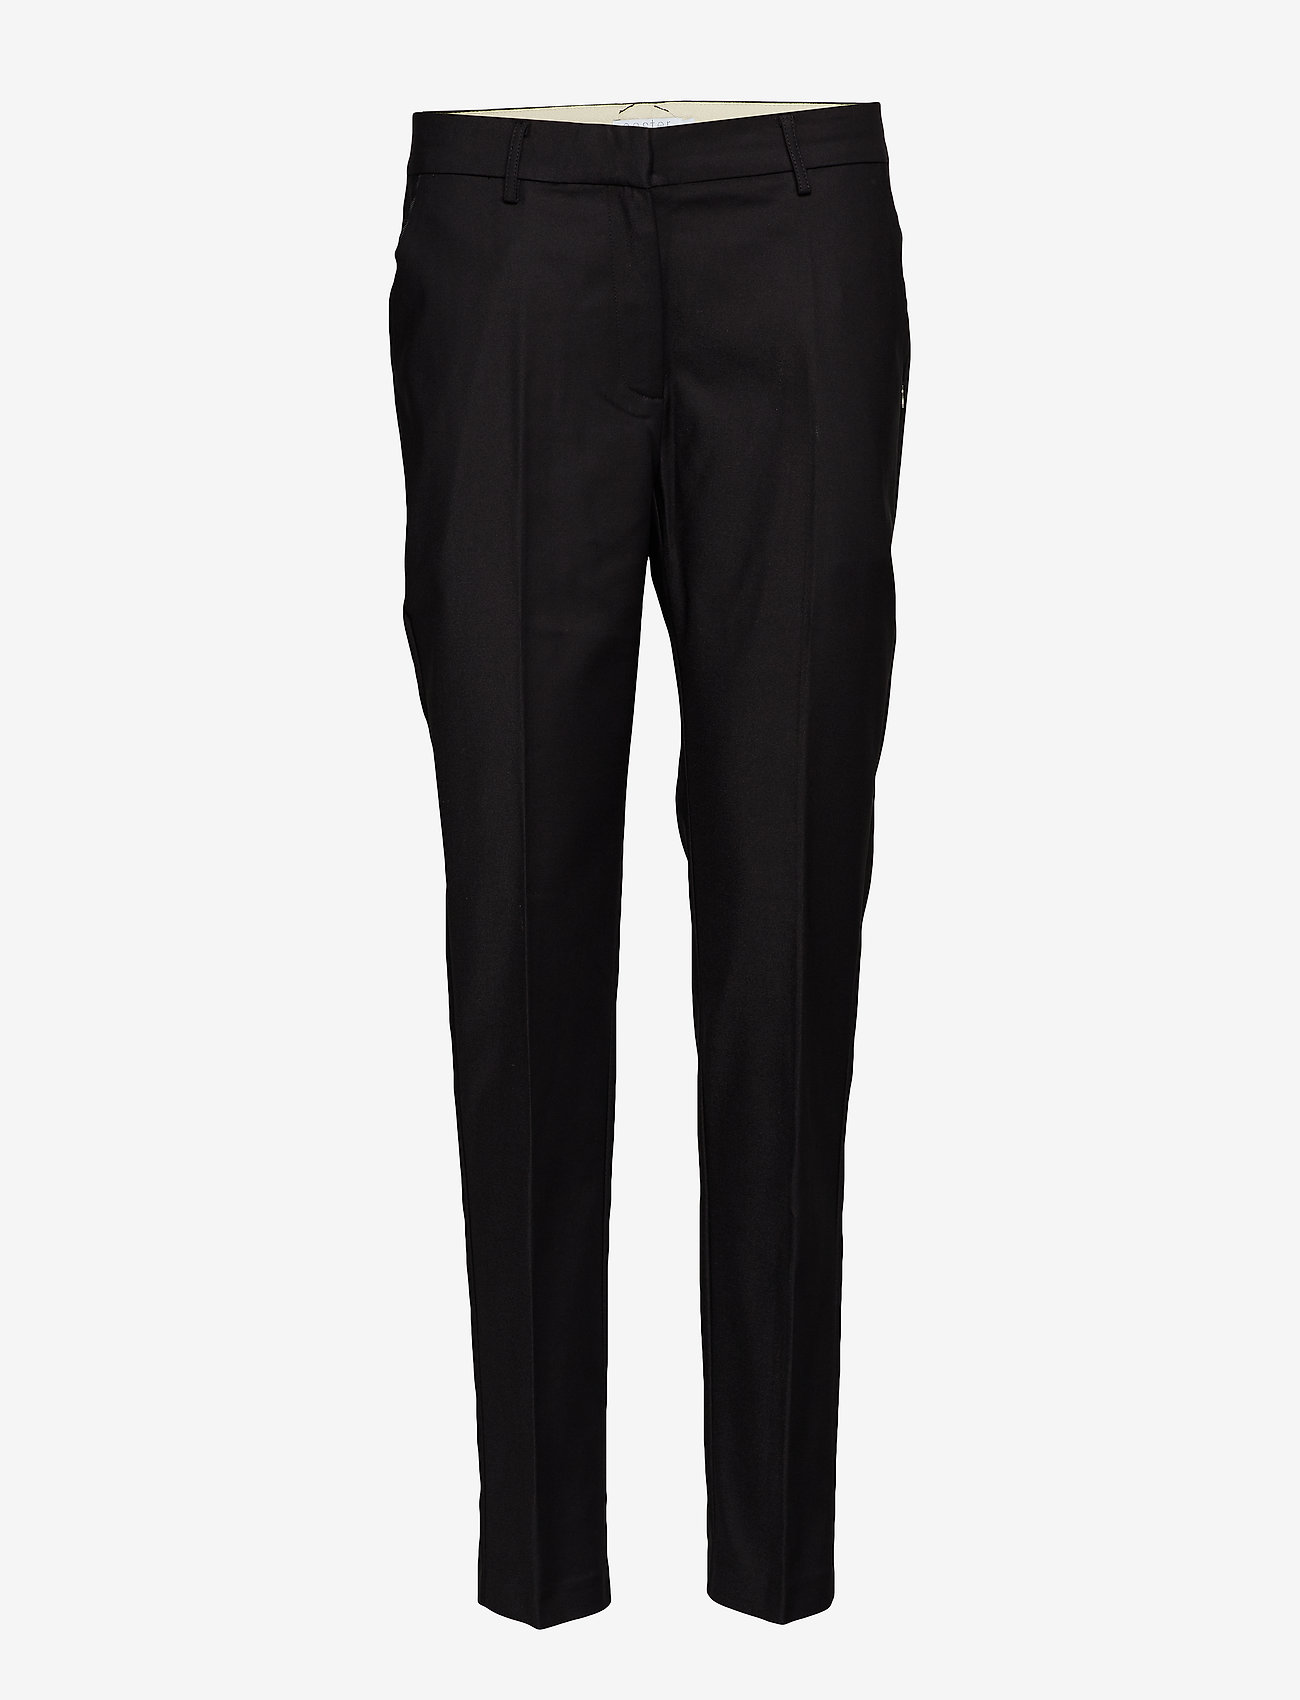 Coster Copenhagen - Pants w. crease - Lucia - slim fit trousers - black - 0